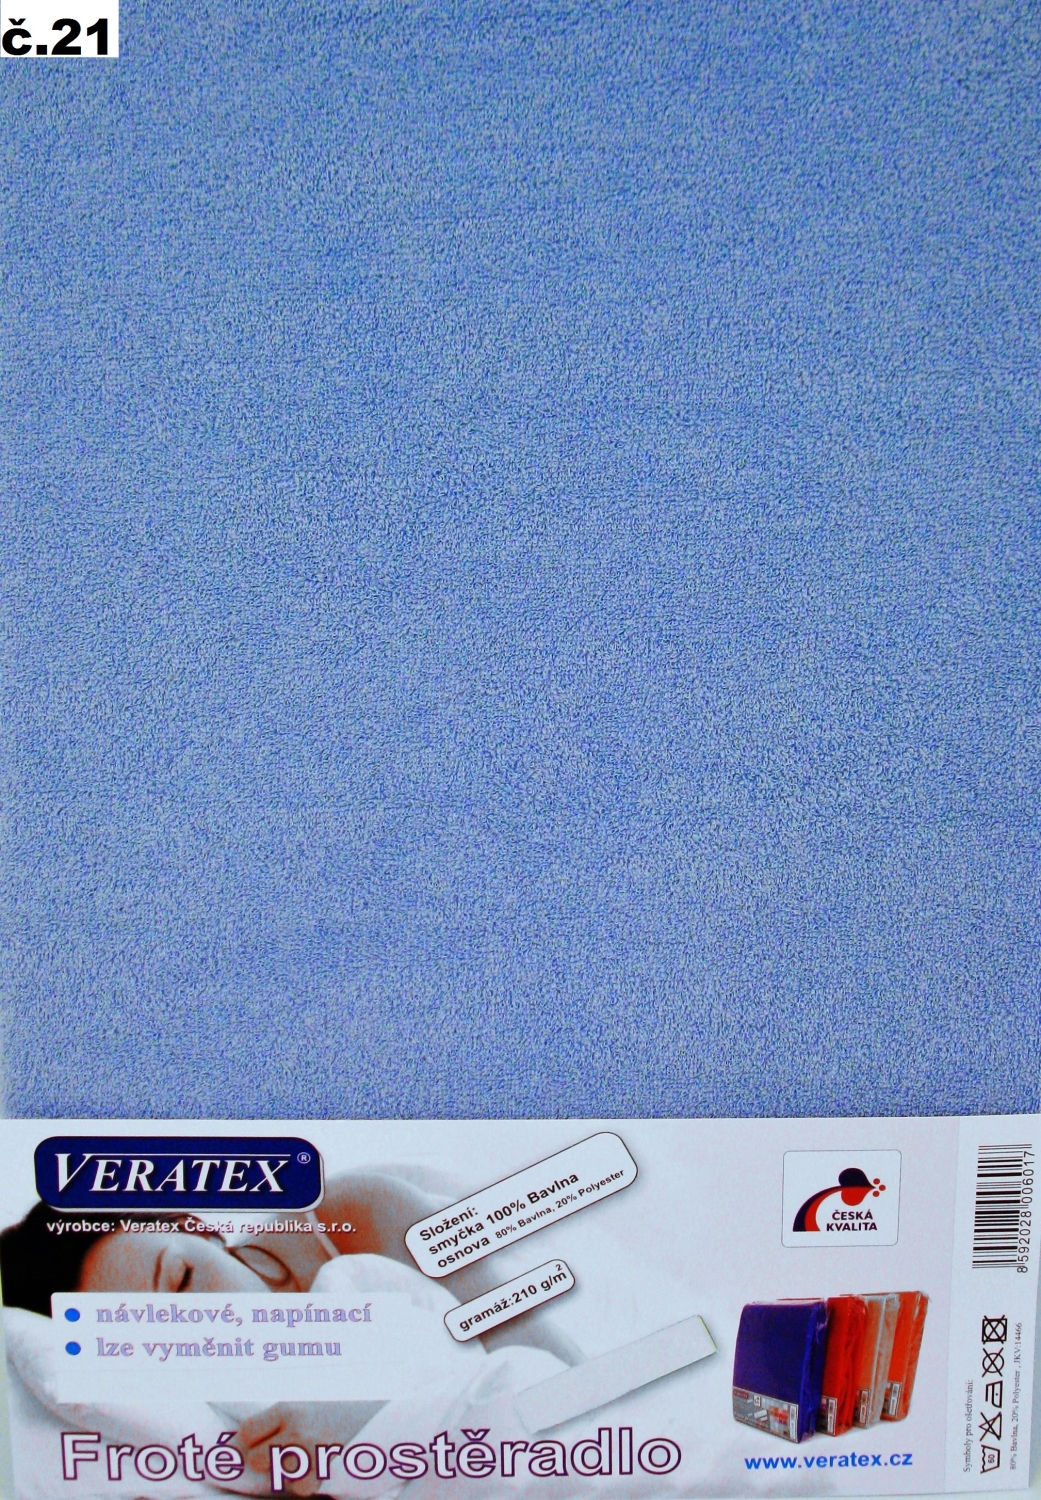 Veratex Froté prostěradlo postýlka 70x140 cm (č.21-sv.modrá)